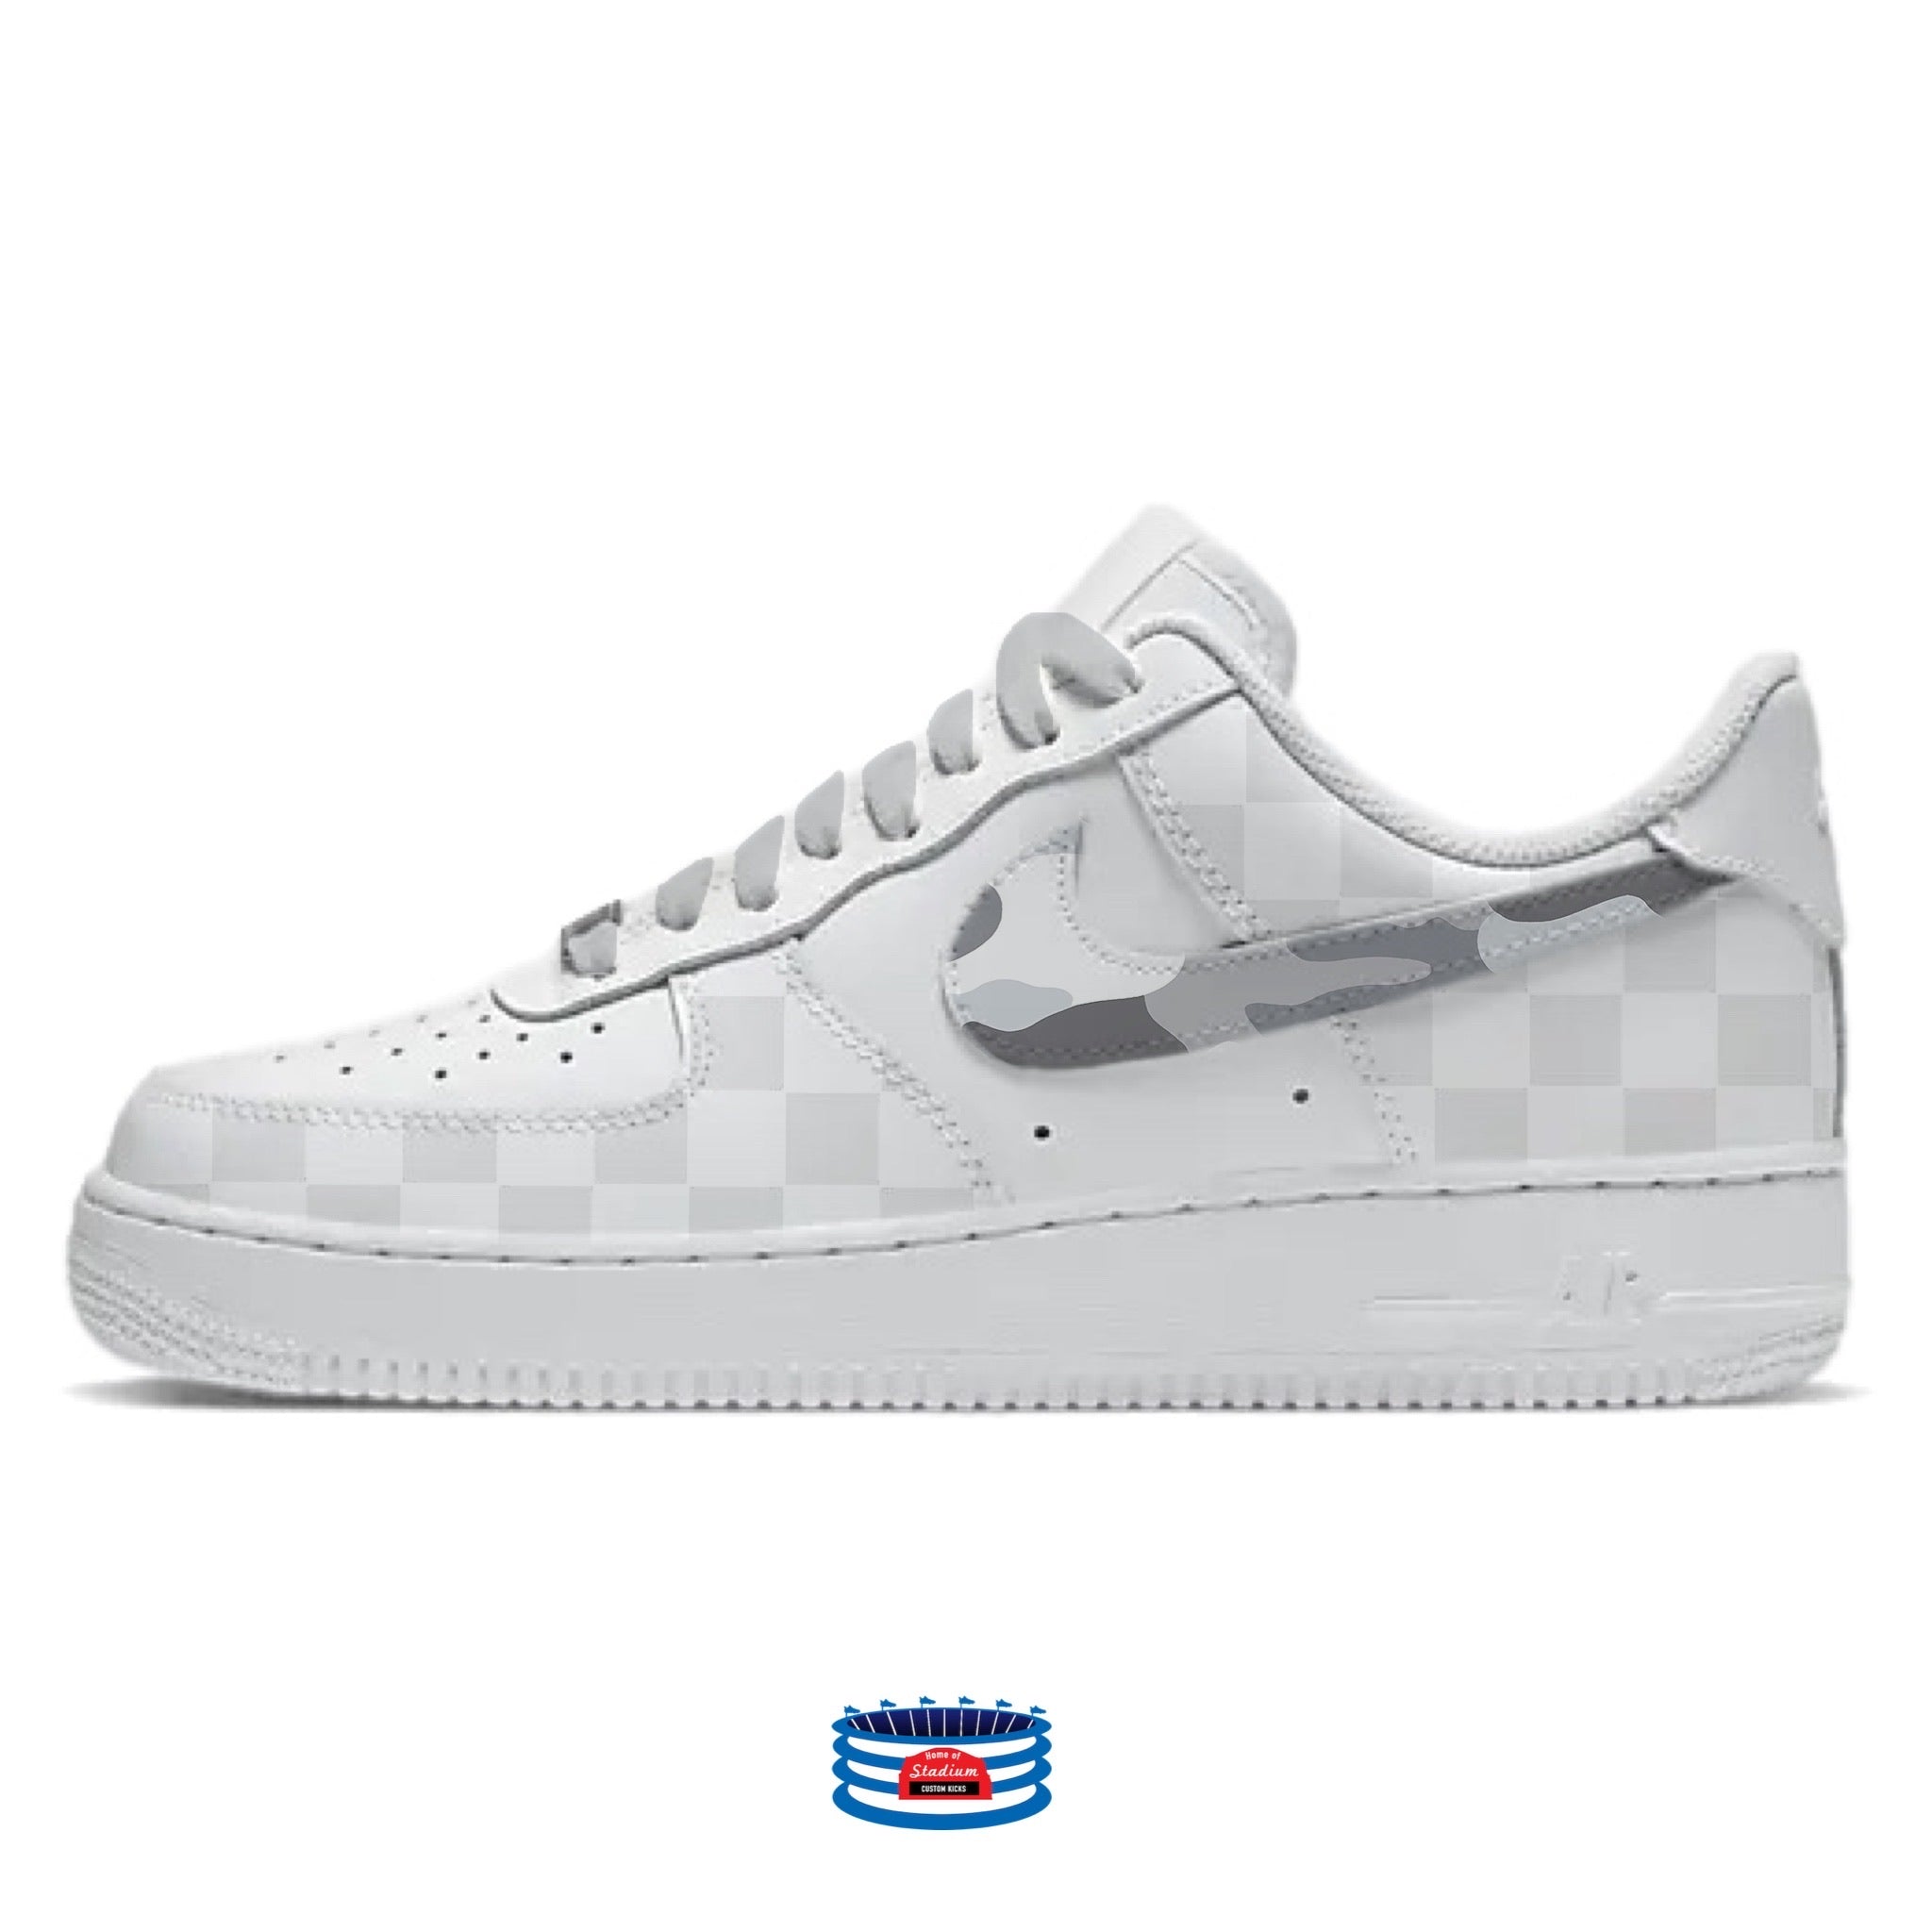 Doelwit Stiptheid Schaap Checkered Camo" Nike Air Force 1 Low Shoes – Stadium Custom Kicks